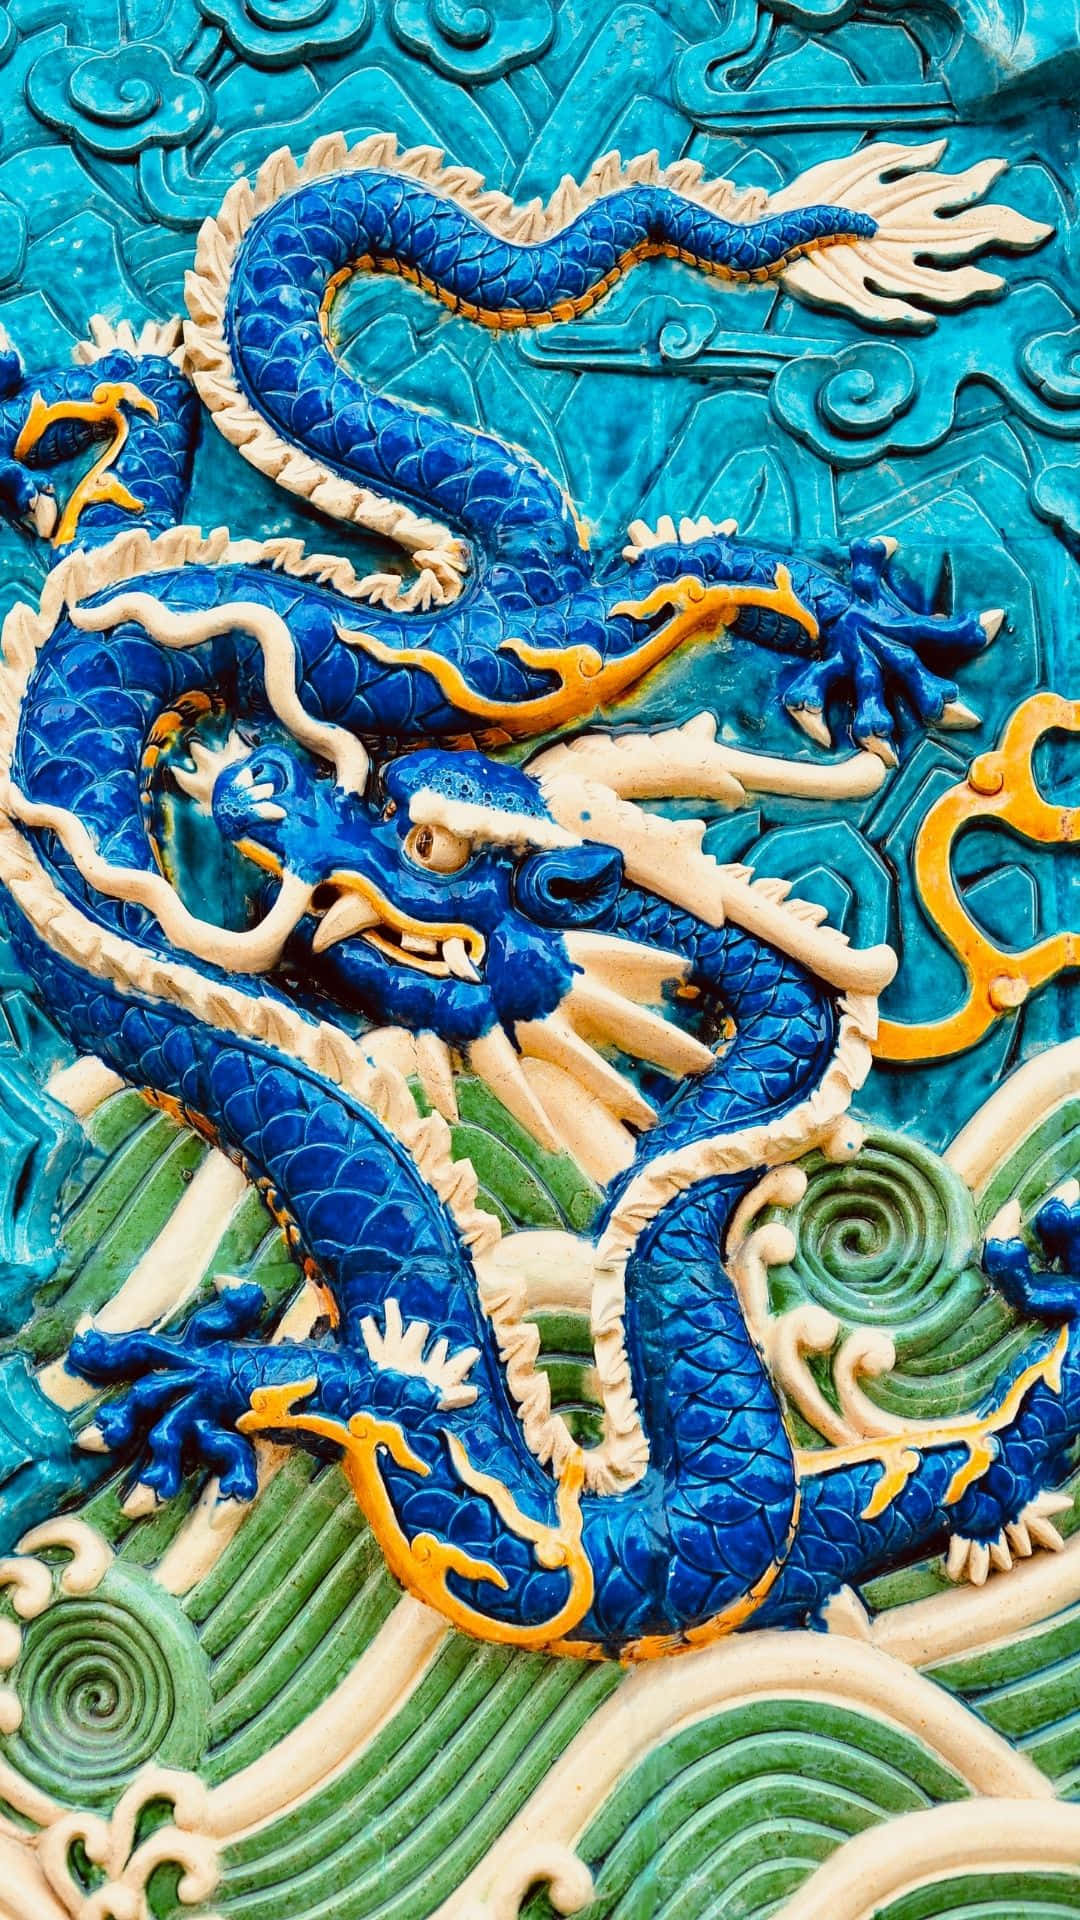 Majestic Blue Dragon soaring across the sky Wallpaper